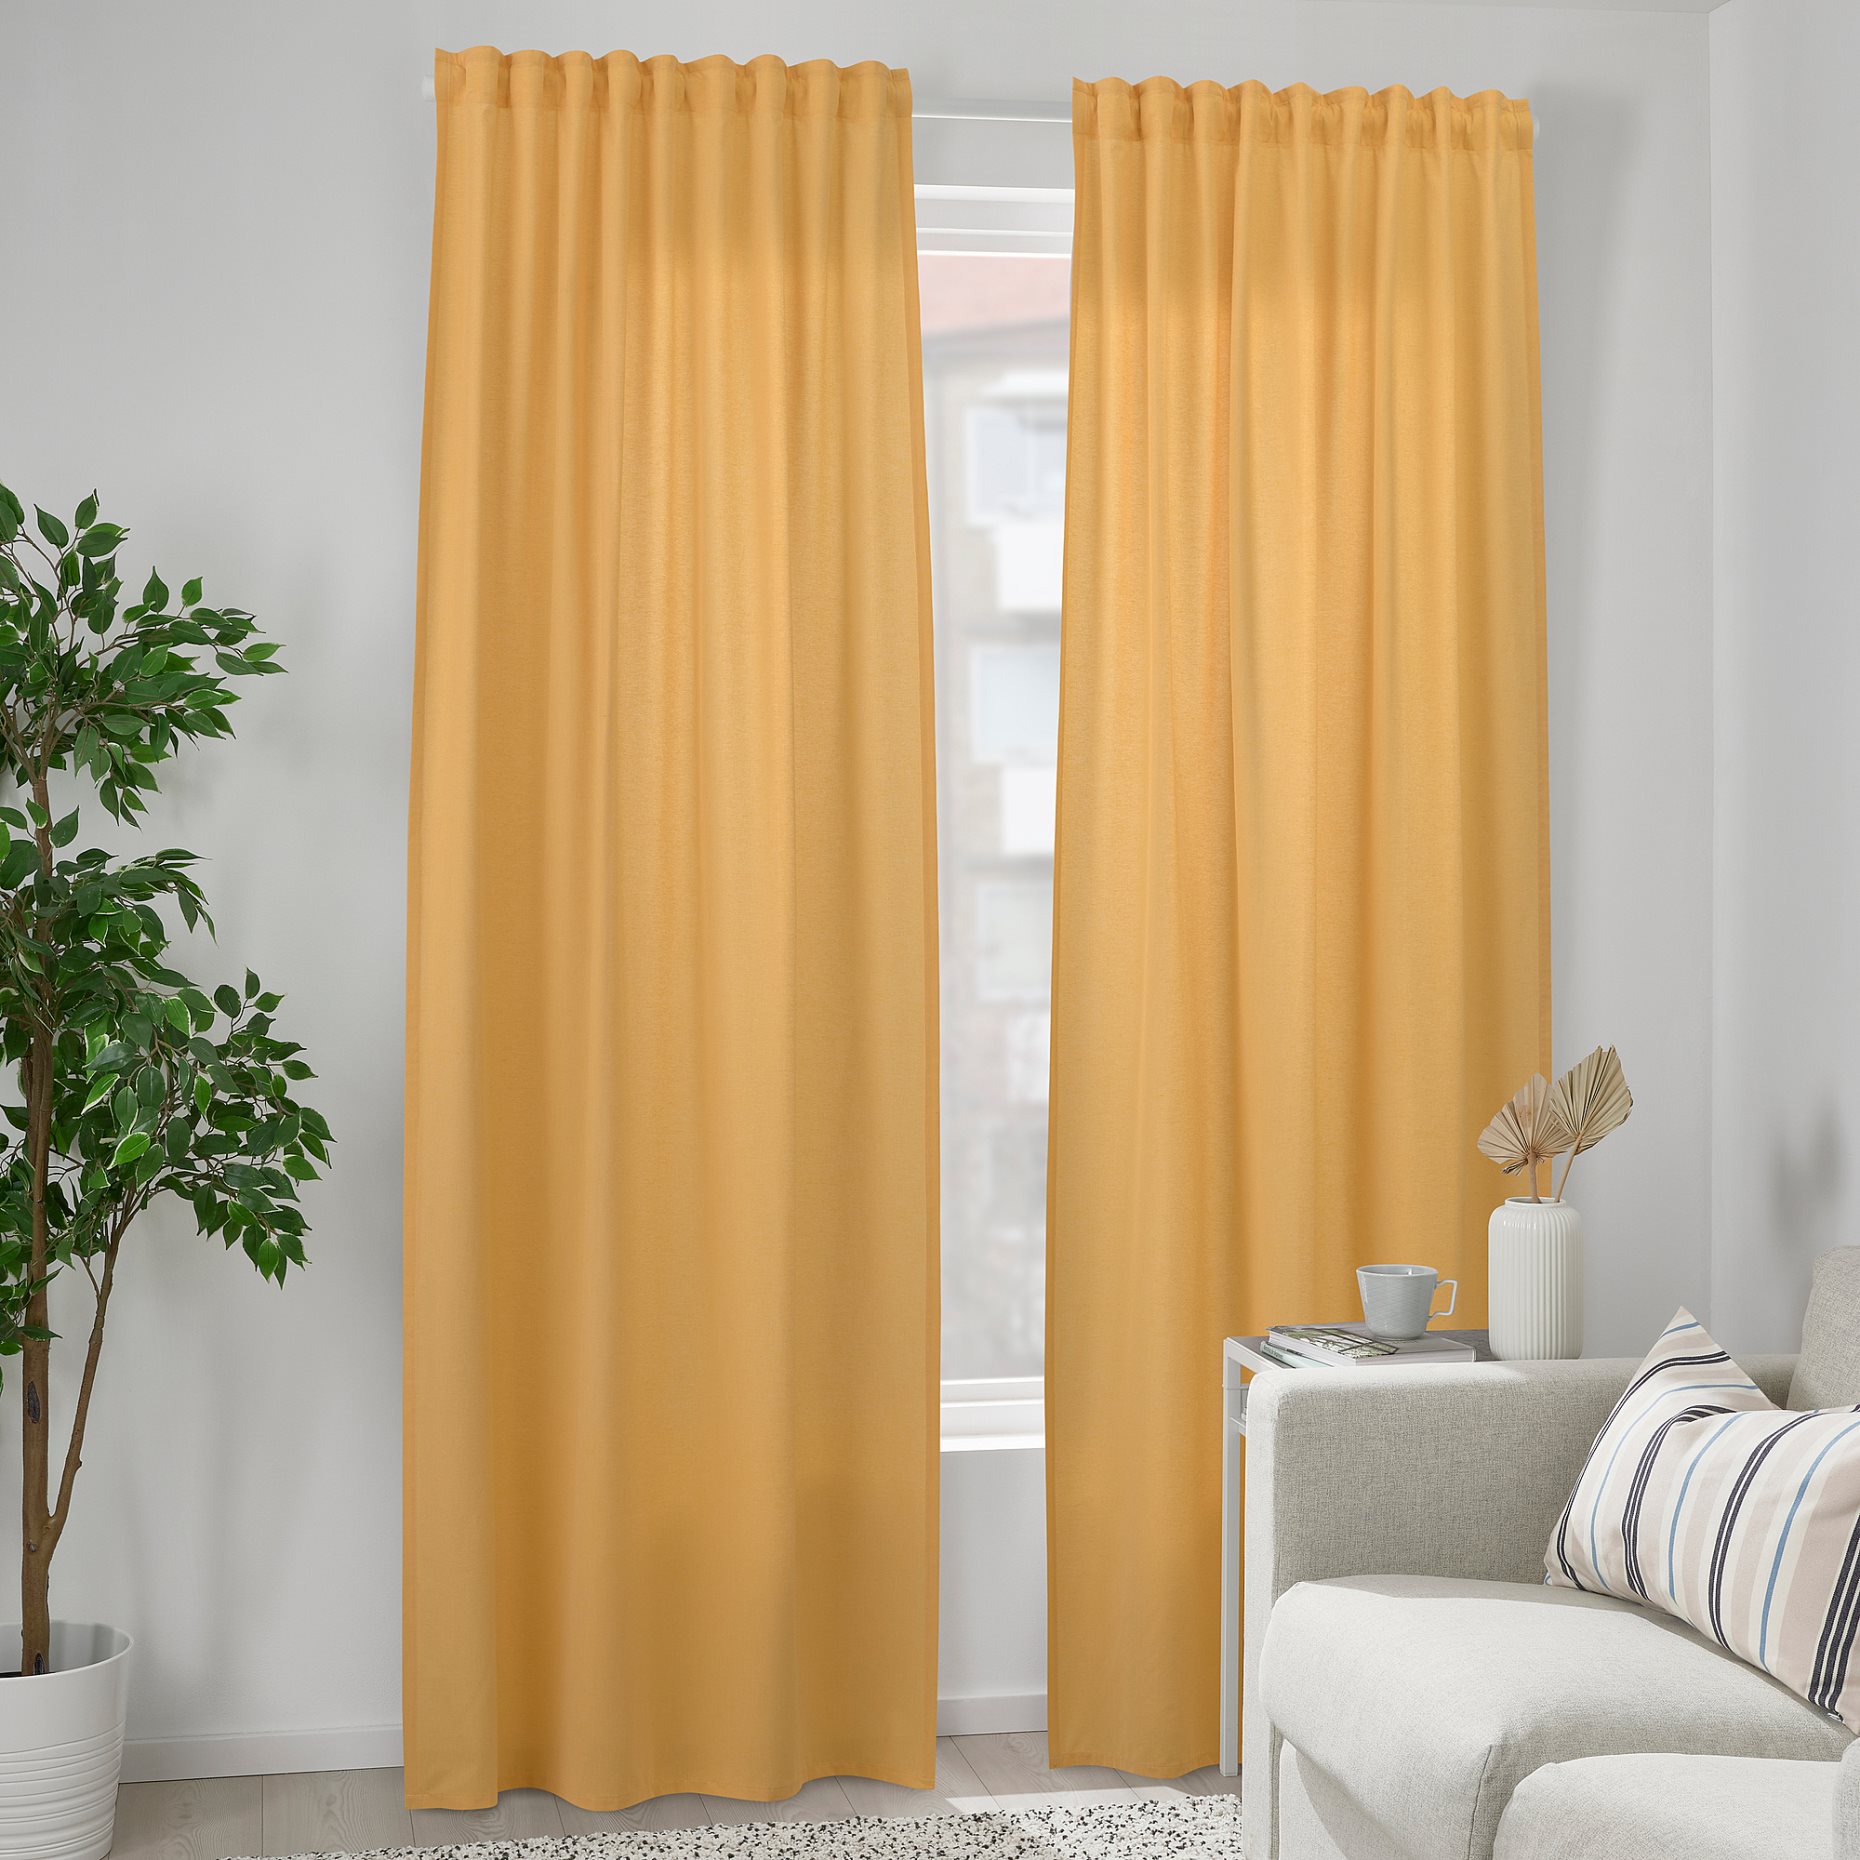 VAXELBRUK, curtains 1 pair, 140x300 cm, 705.690.84